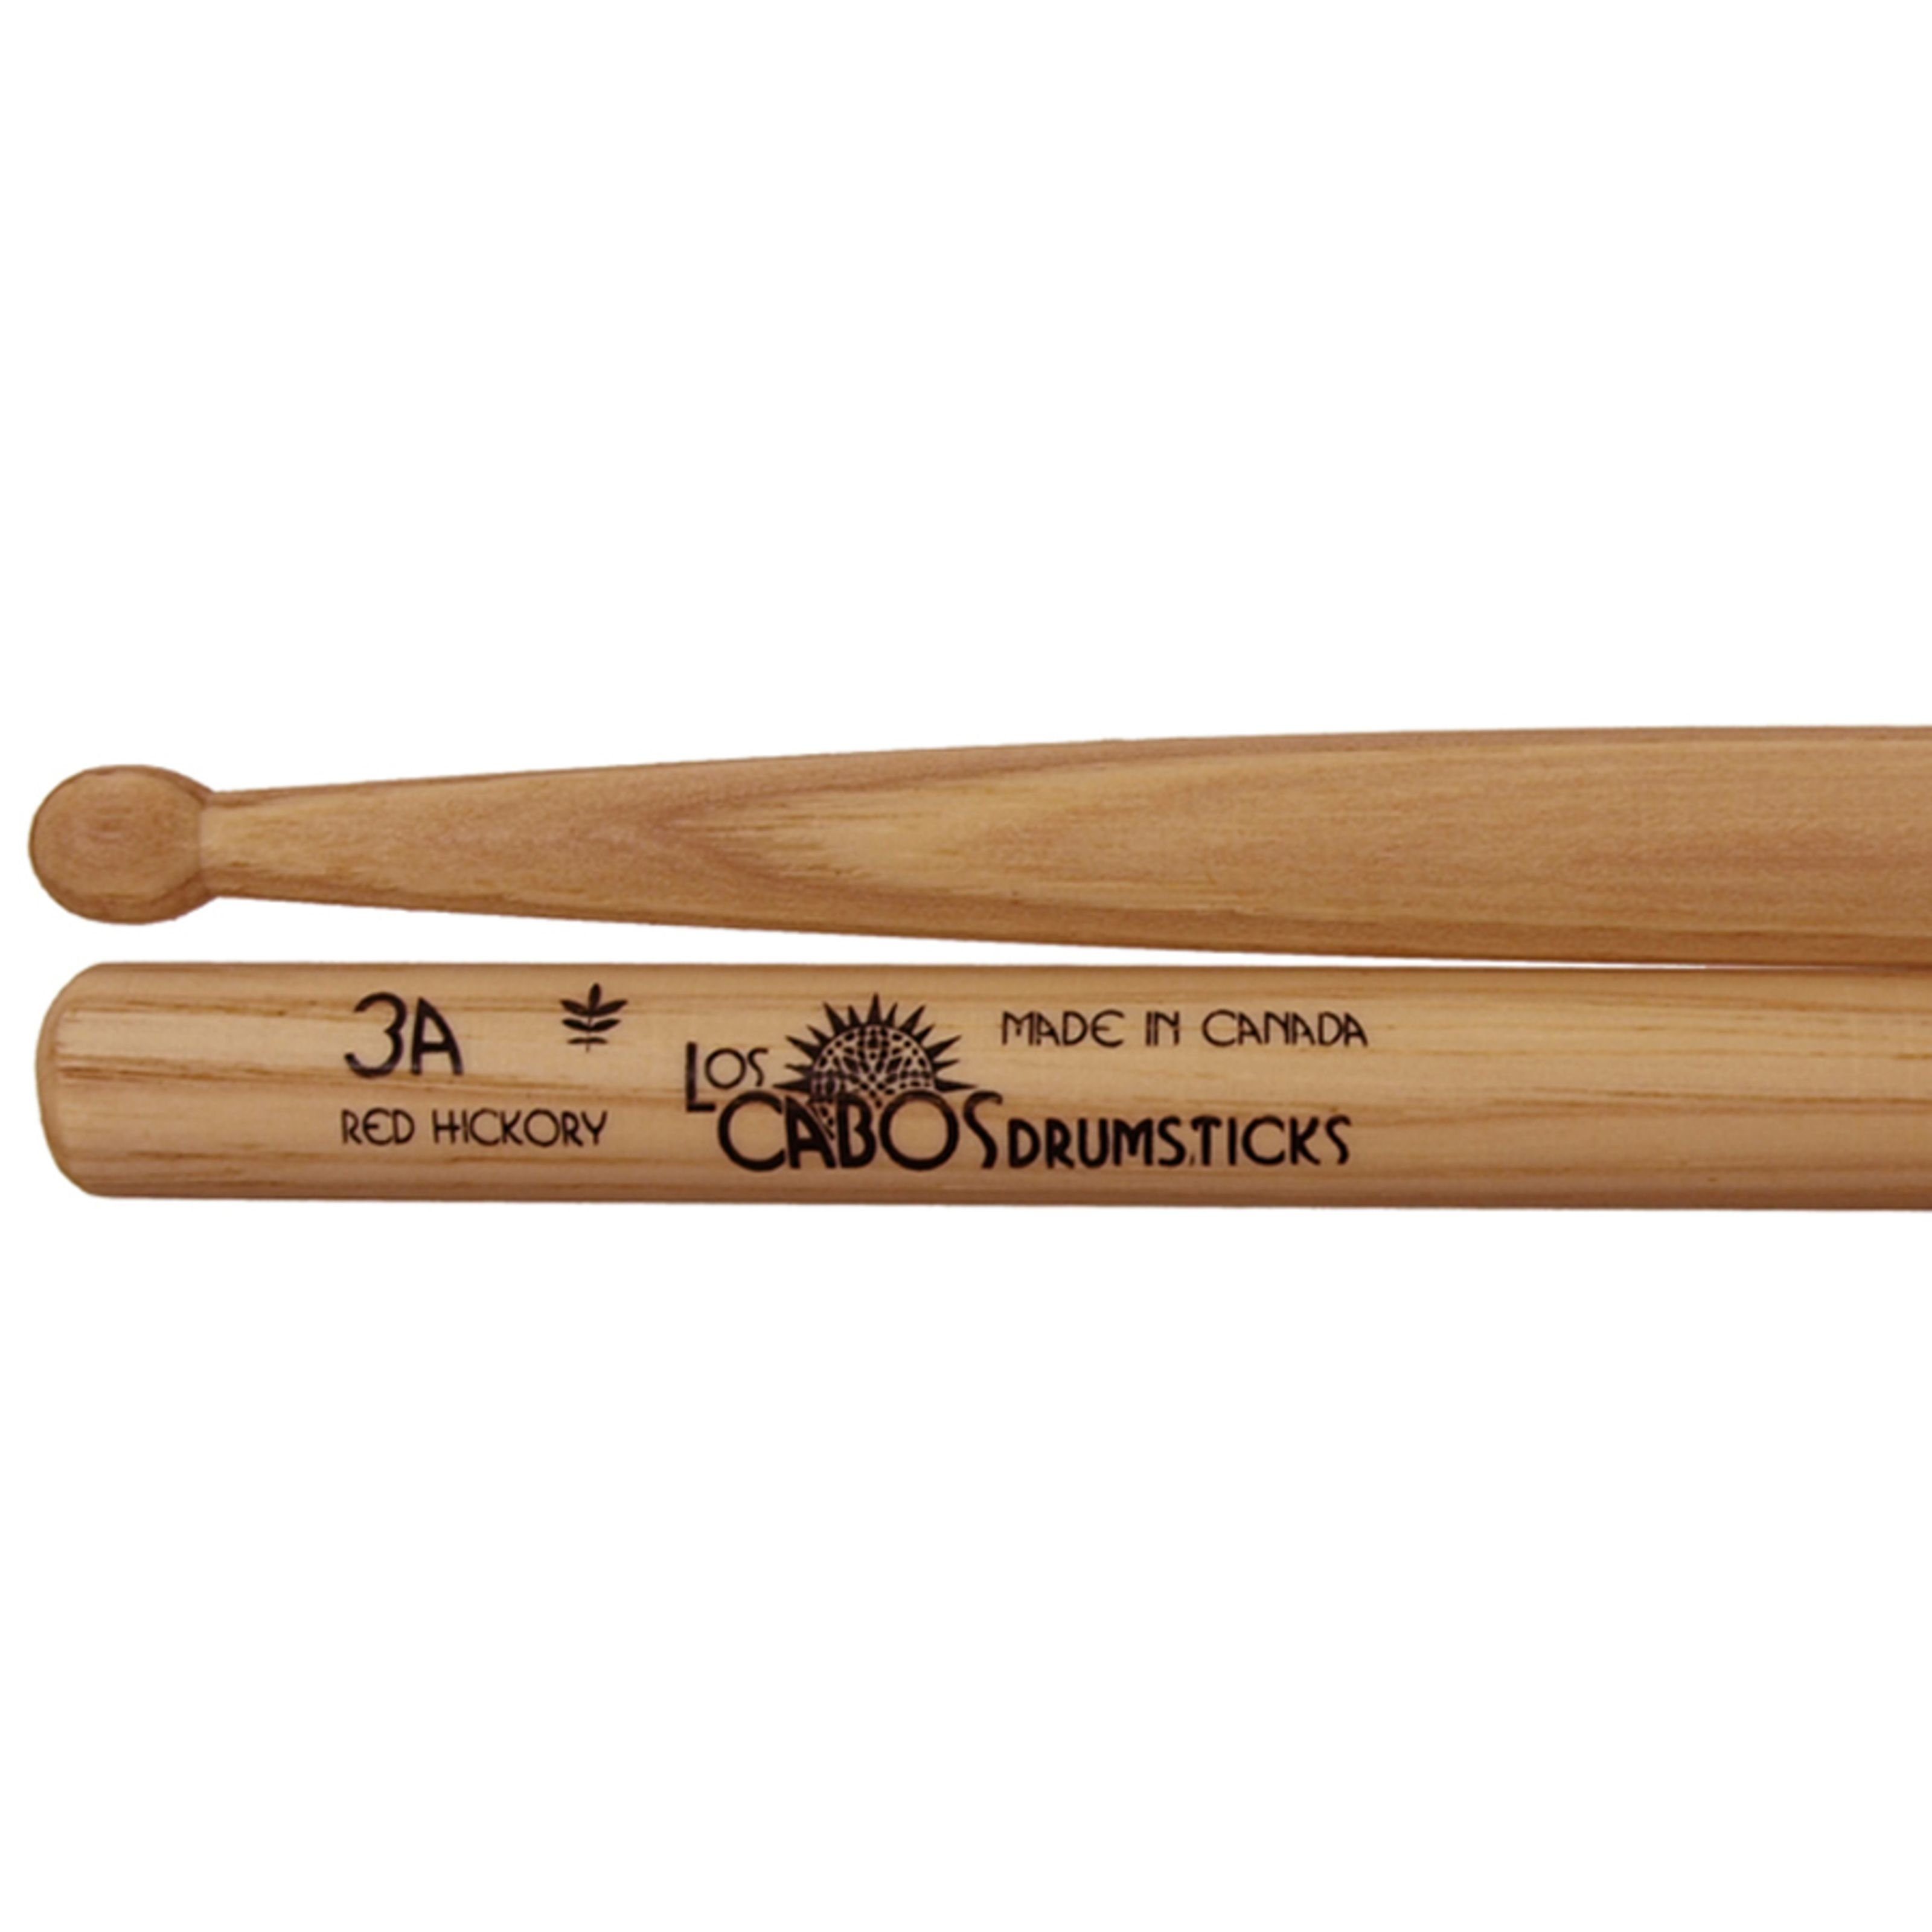 Los Cabos Drumsticks (3A Red Hickory Sticks, Wood Tip, Sticks, Beater und Mallets, Drumsticks Holztip), 3A Red Hickory Sticks, Wood Tip - Drumsticks